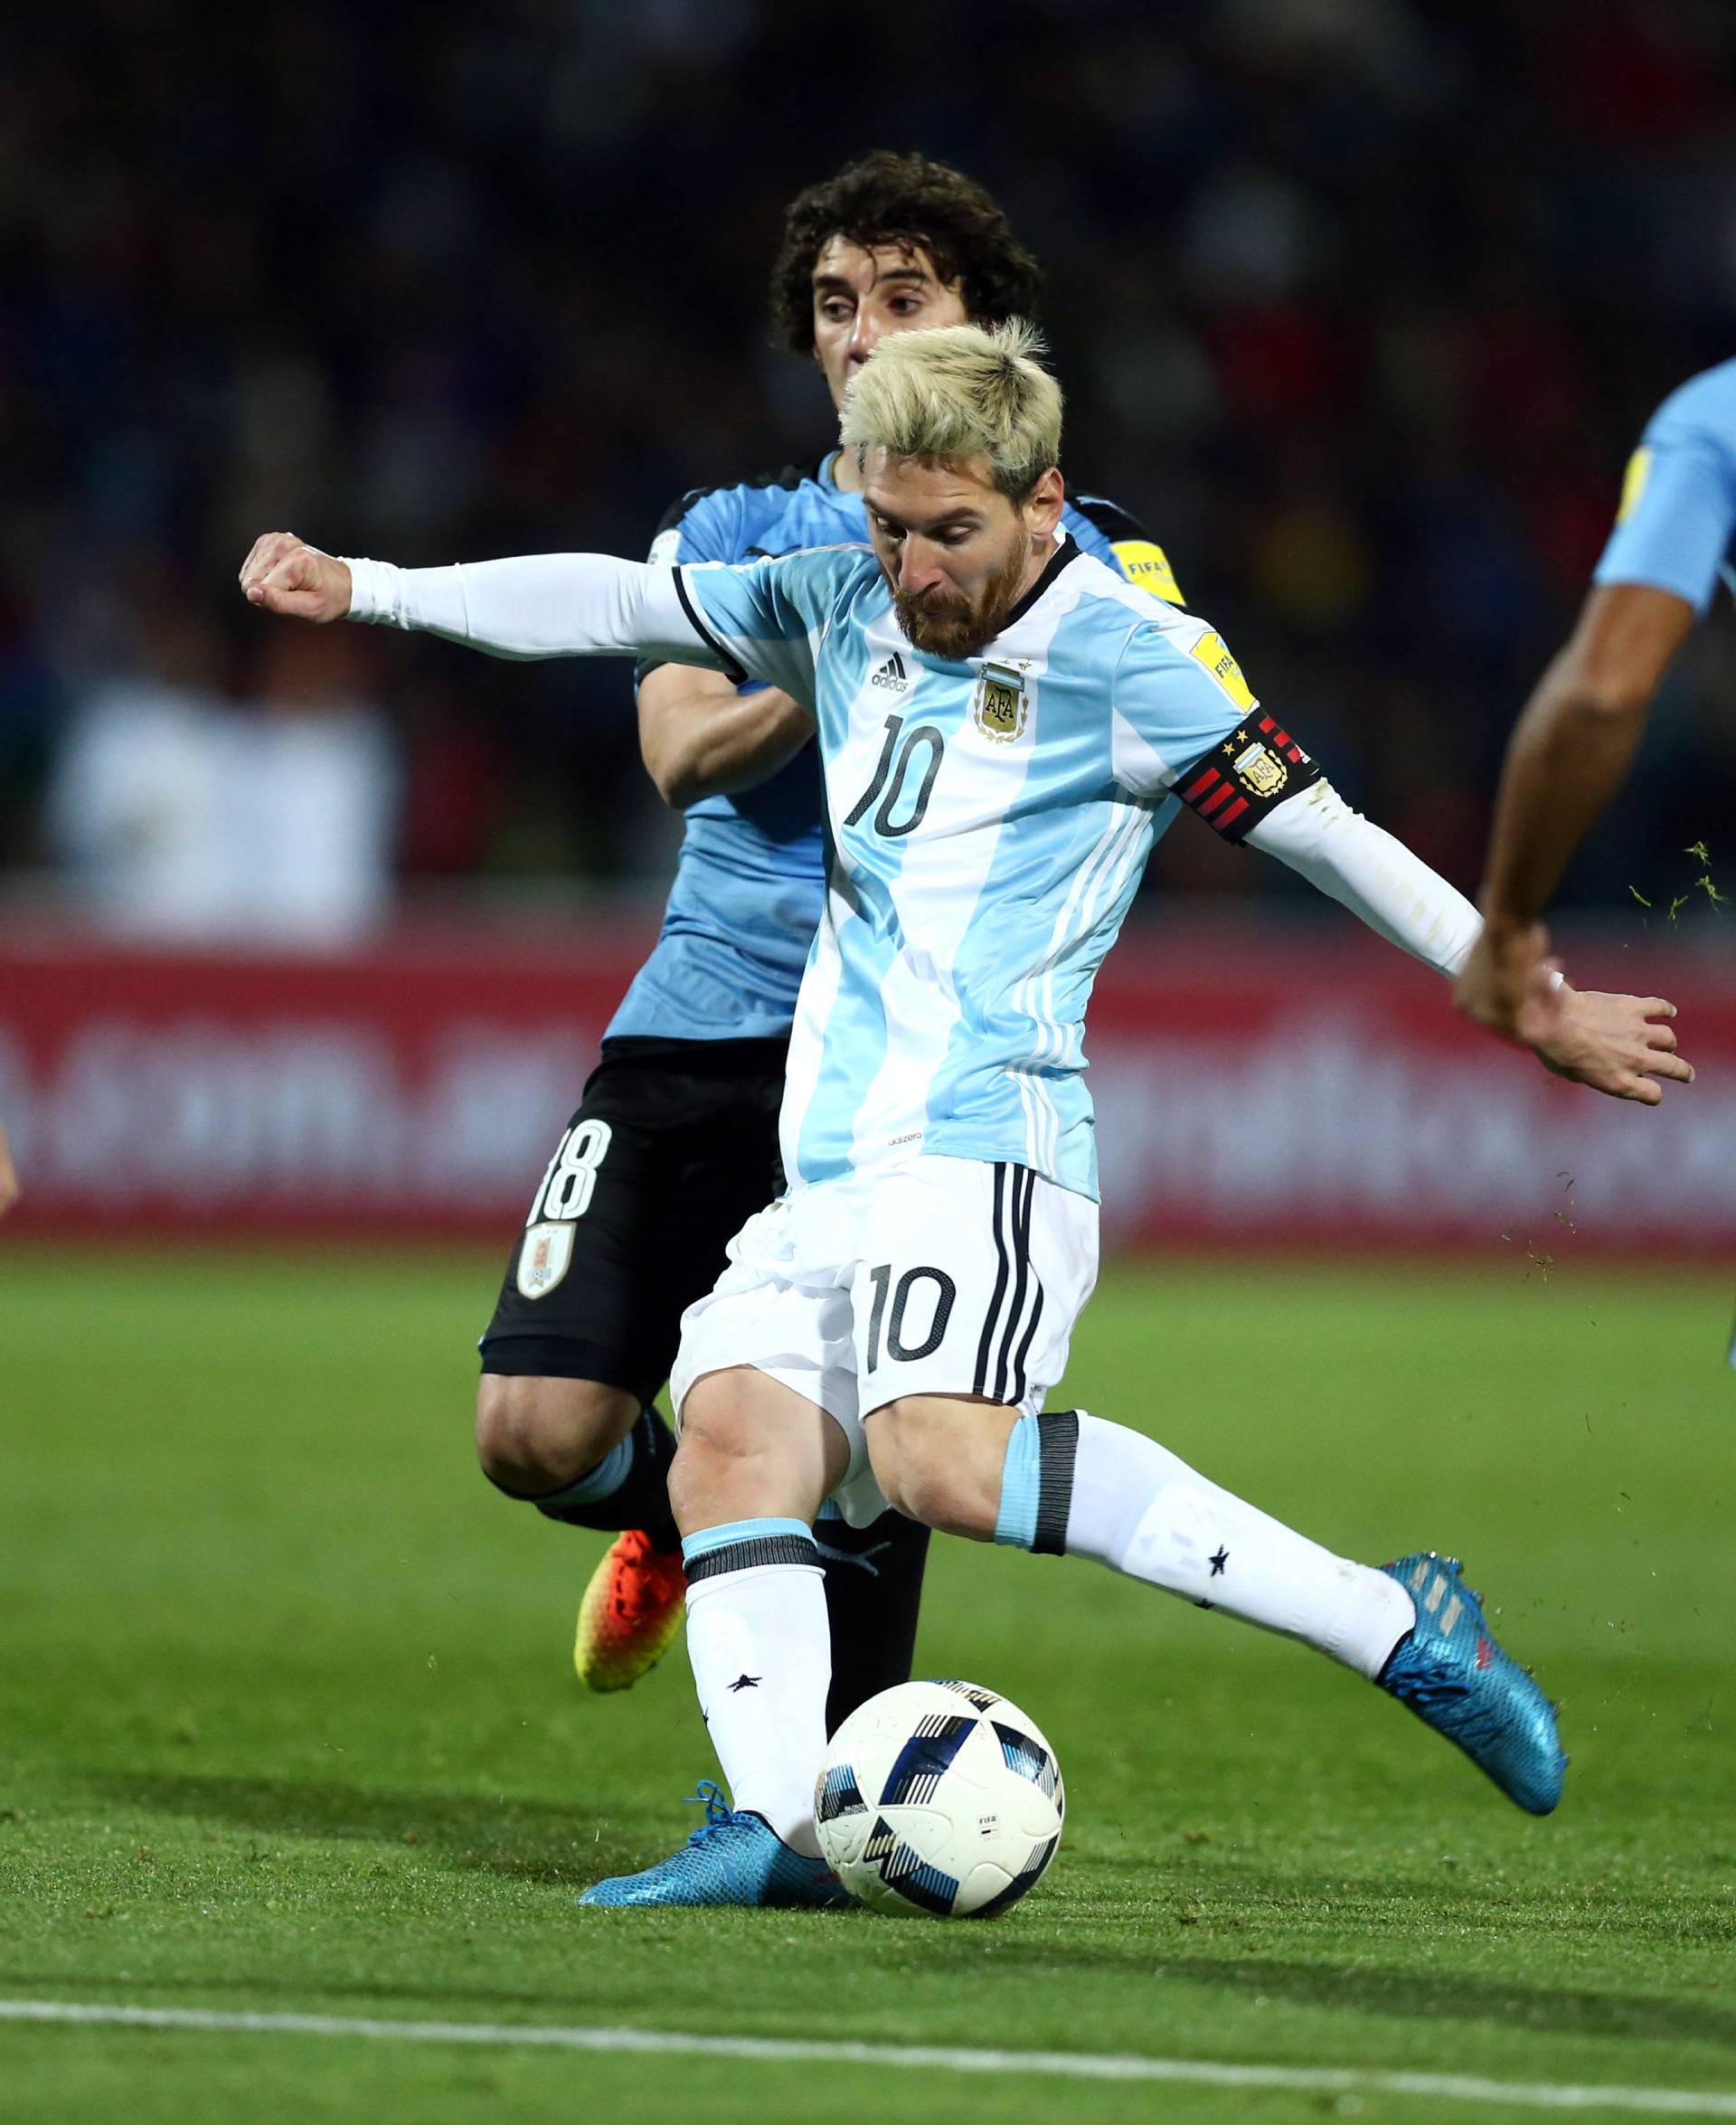 Football Soccer - World Cup 2018 Qualifiers - Argentina v Uruguay - Estadio Malvinas Argentinas, Mendoza, Argentina